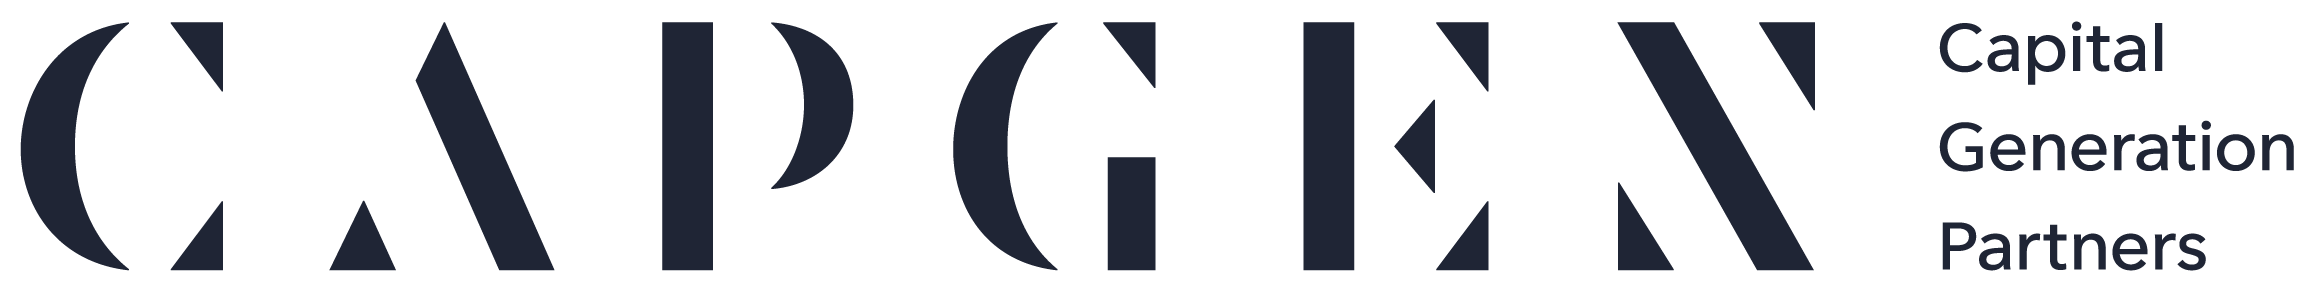 logo for Capital Generation Partners